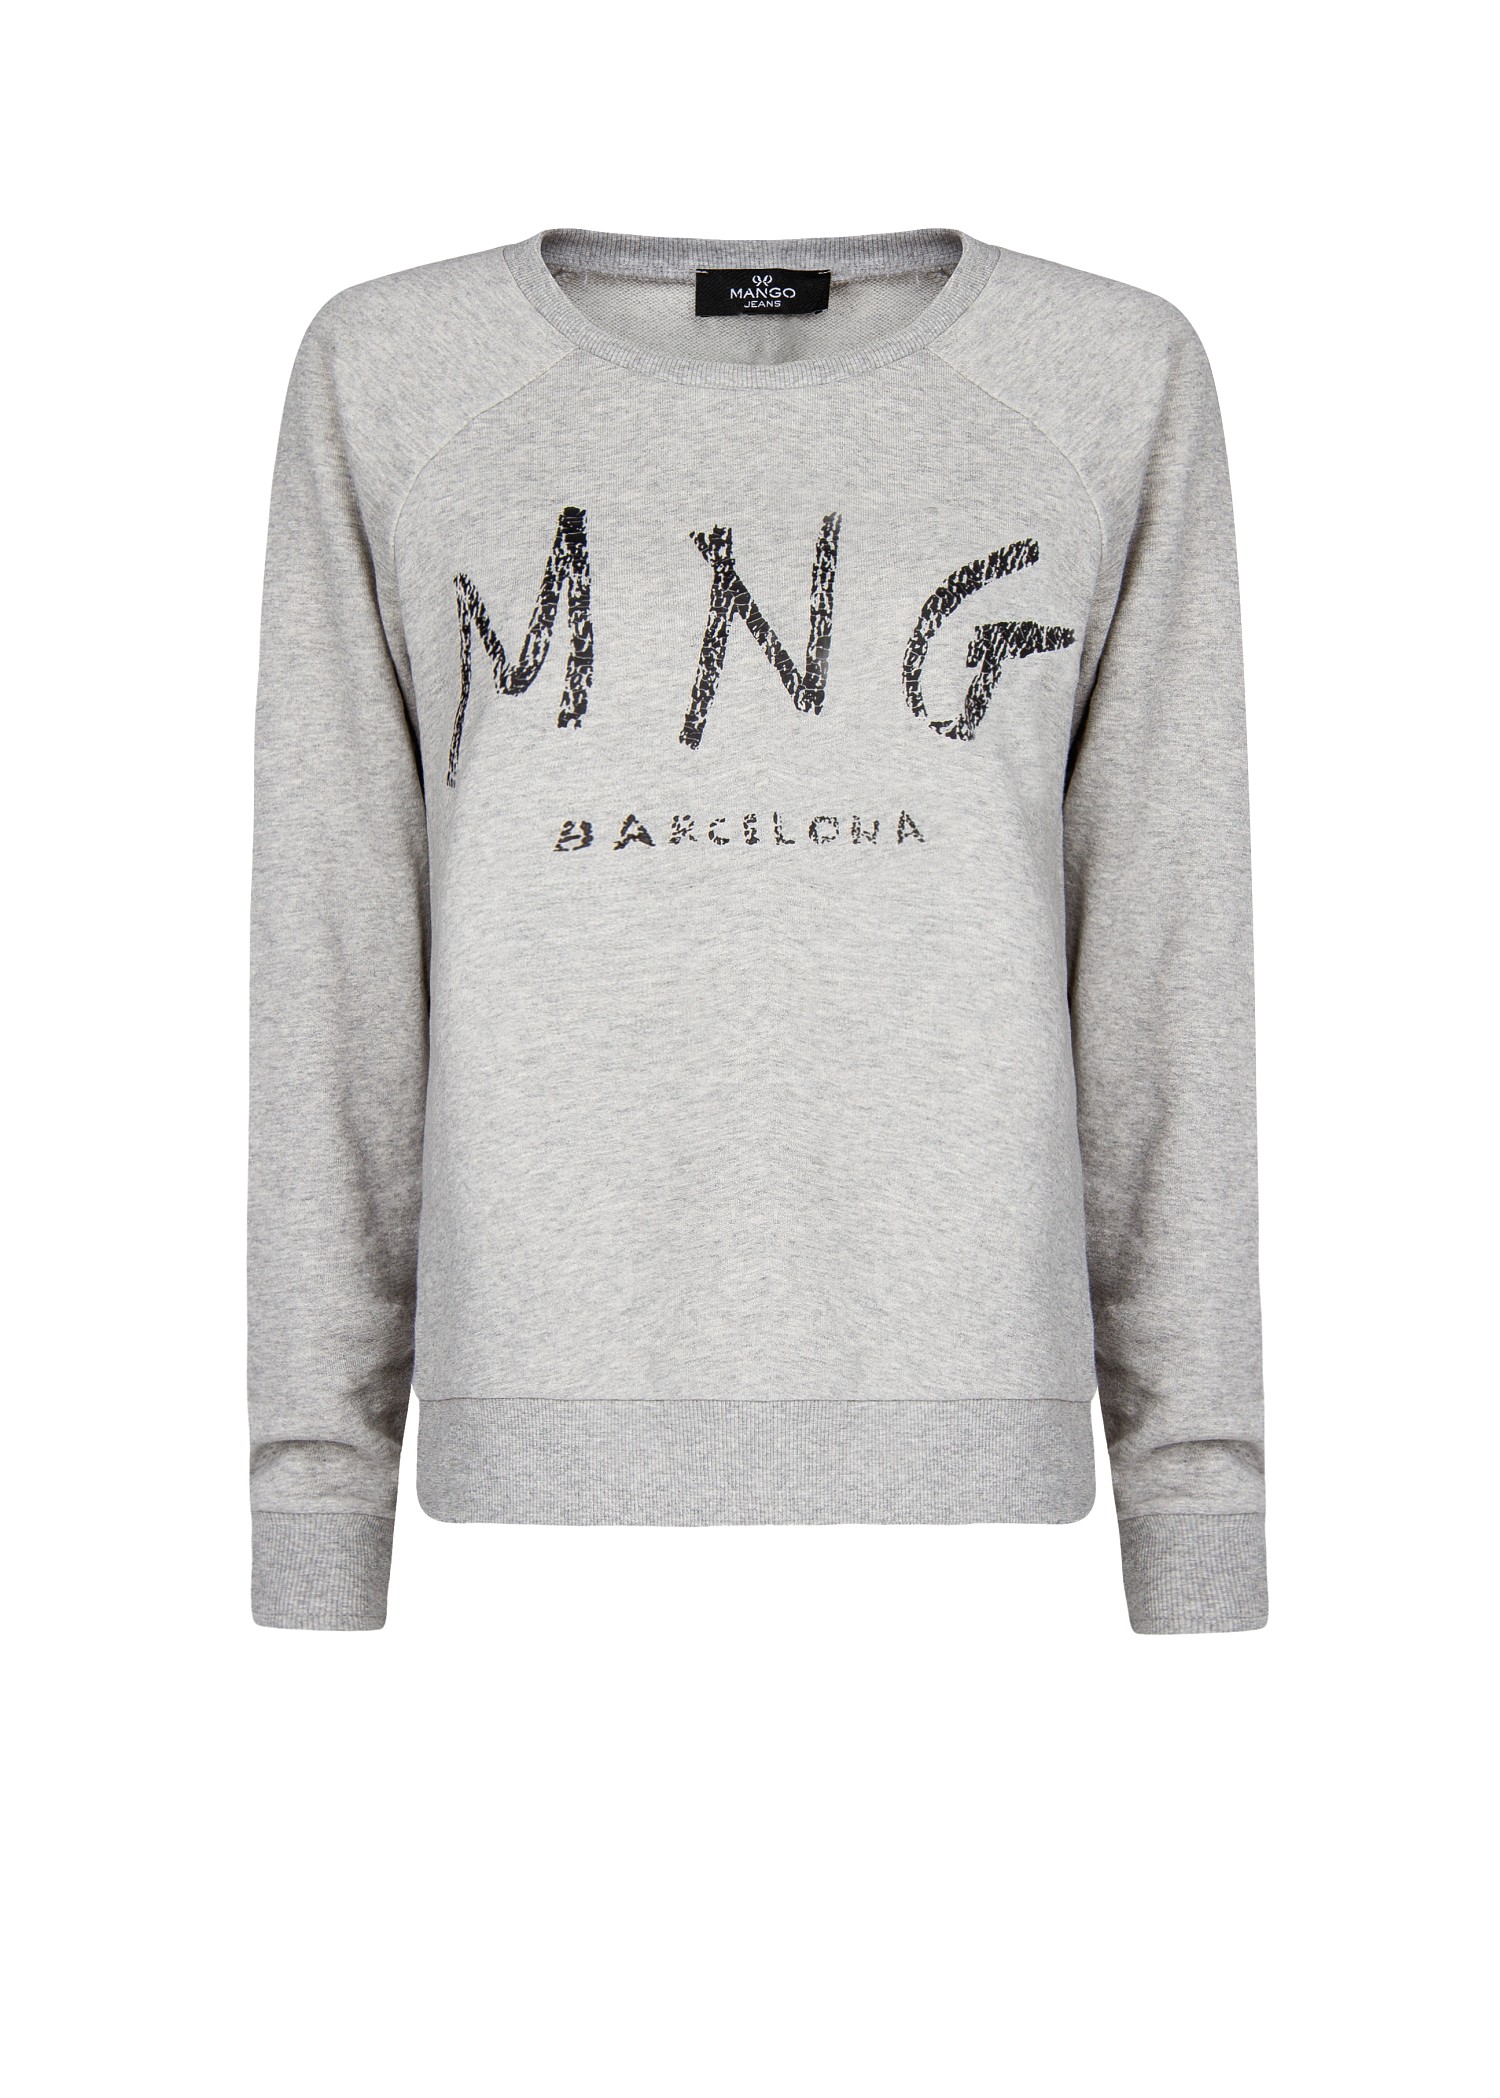 Lyst - Mango Mng Barcelona Sweater in Gray